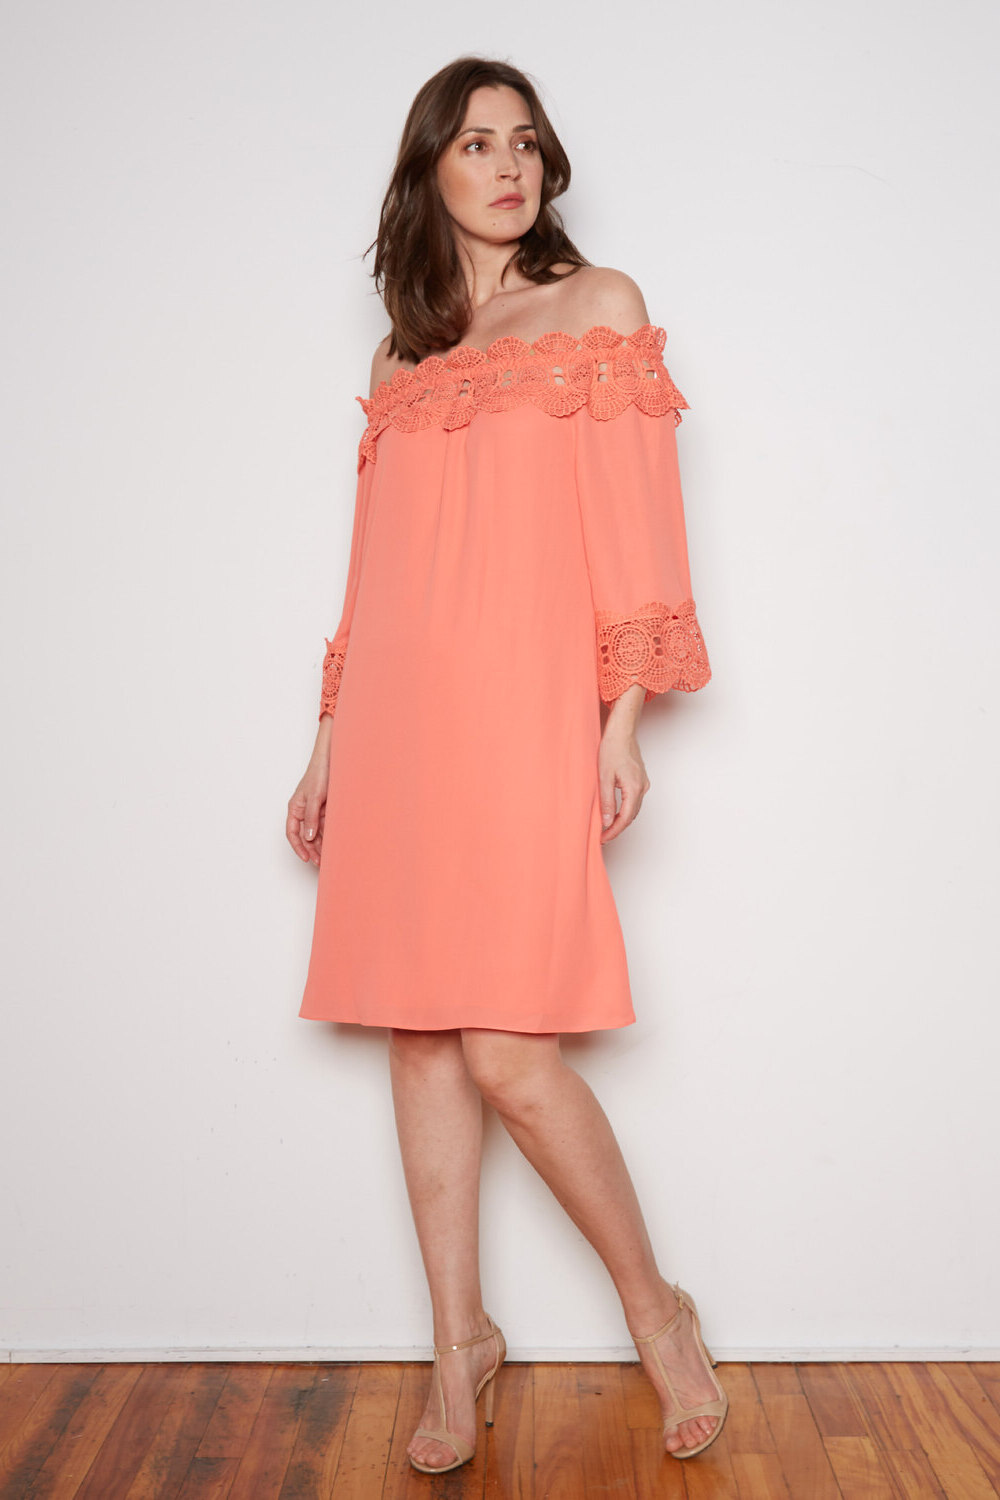 Joseph Ribkoff Dress Style 202091. Cantaloupe